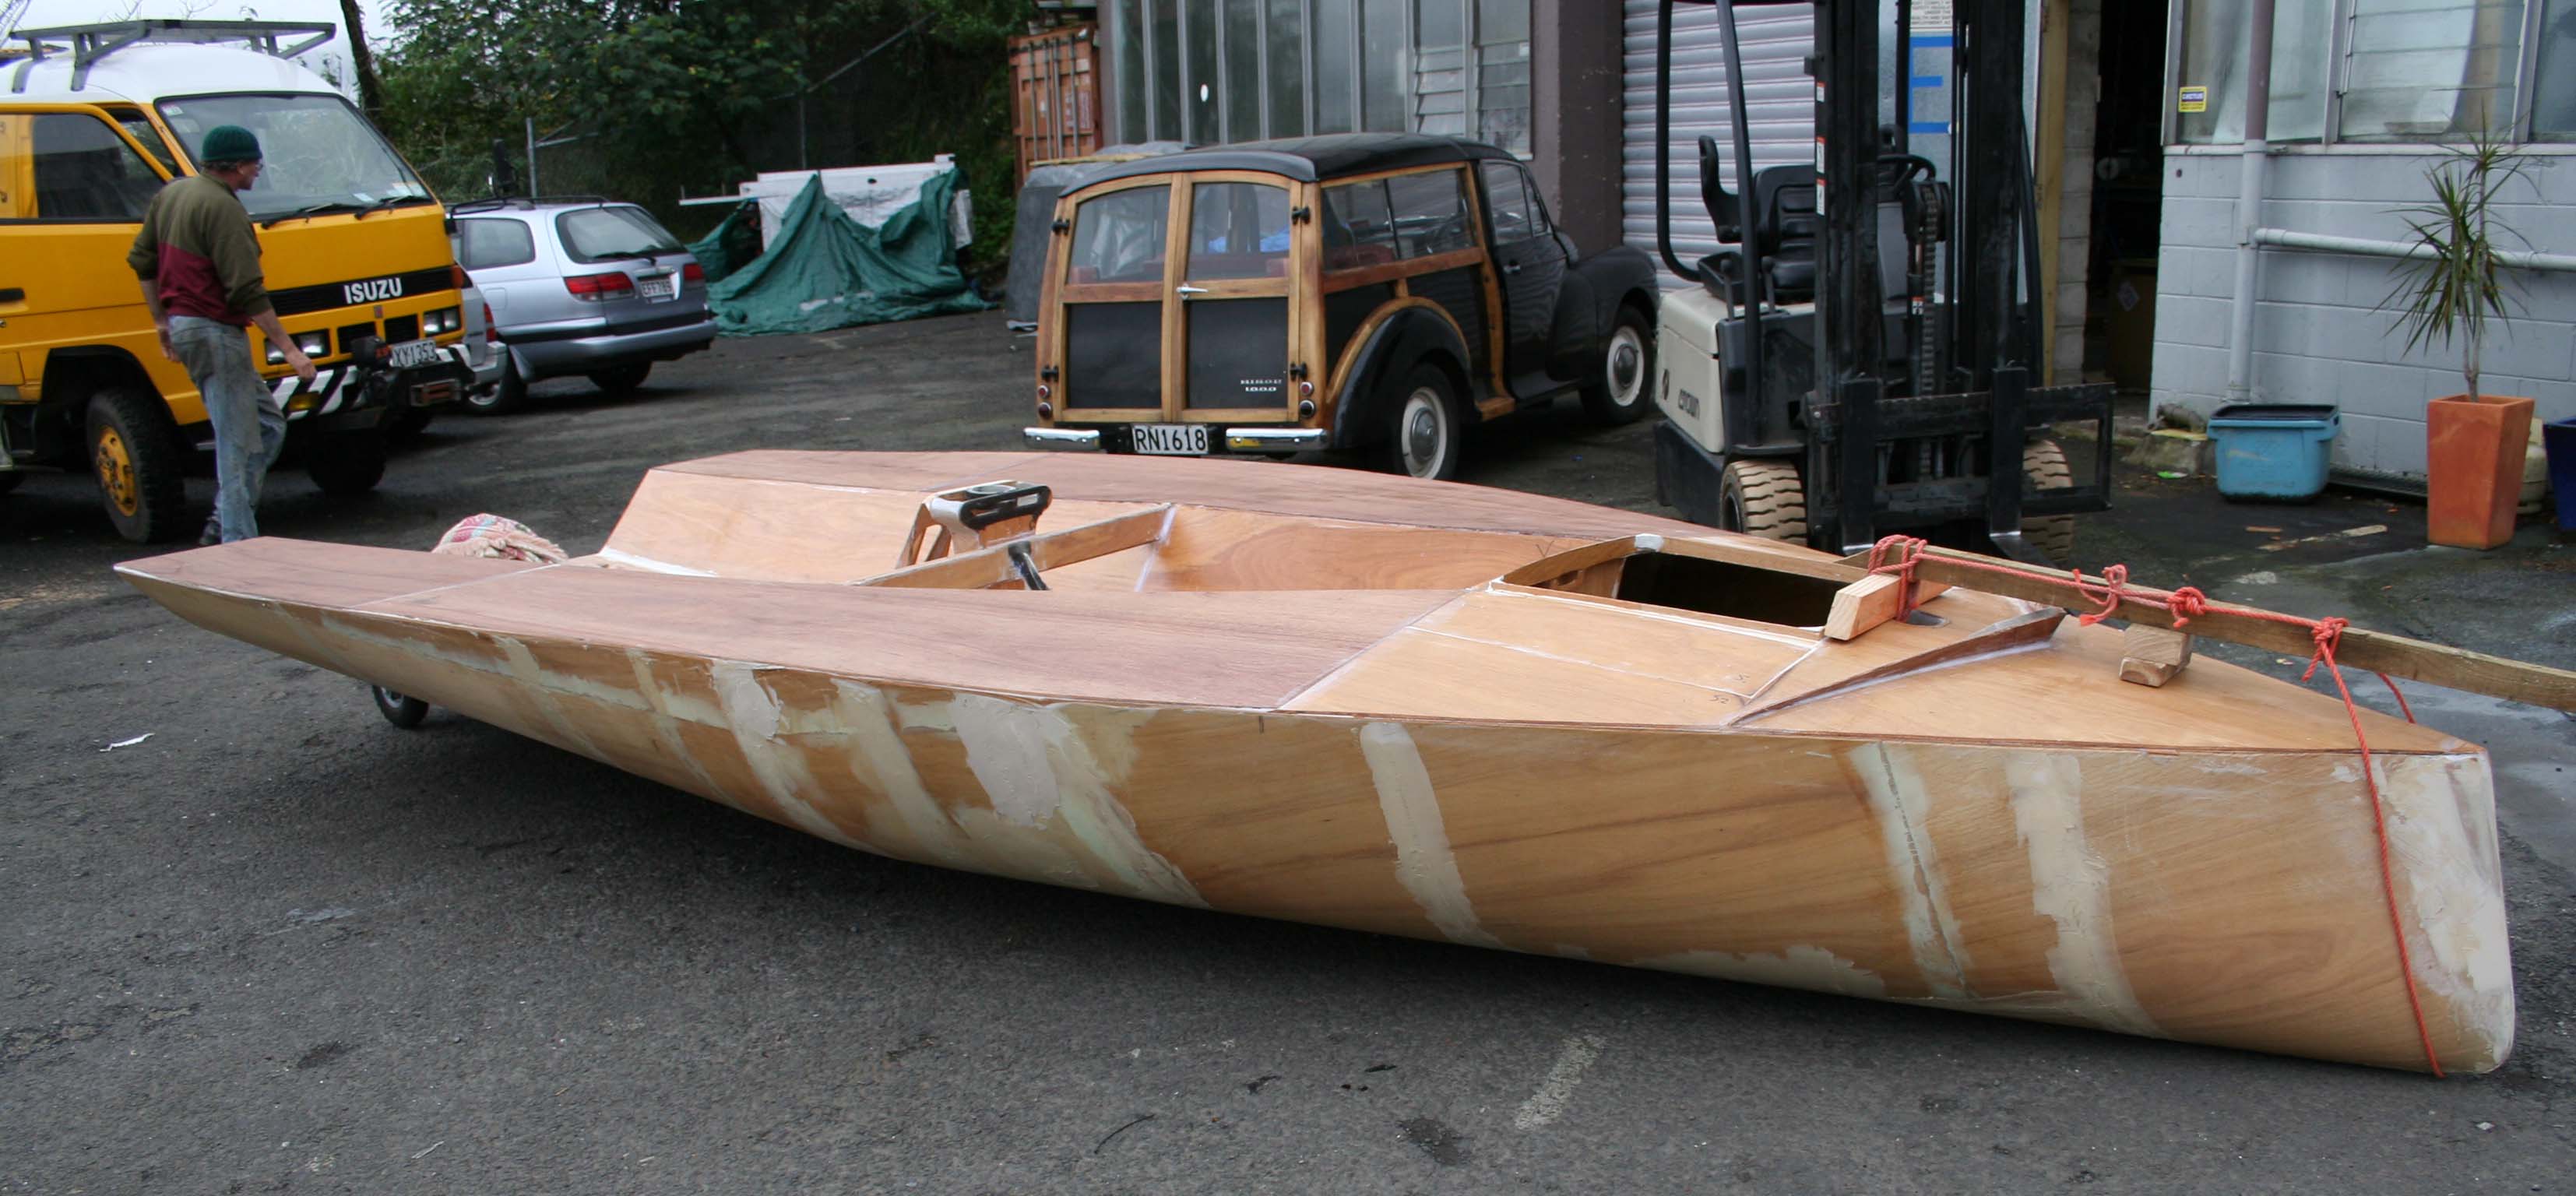 sheet plywood canoe plans | Canoe sailing plan